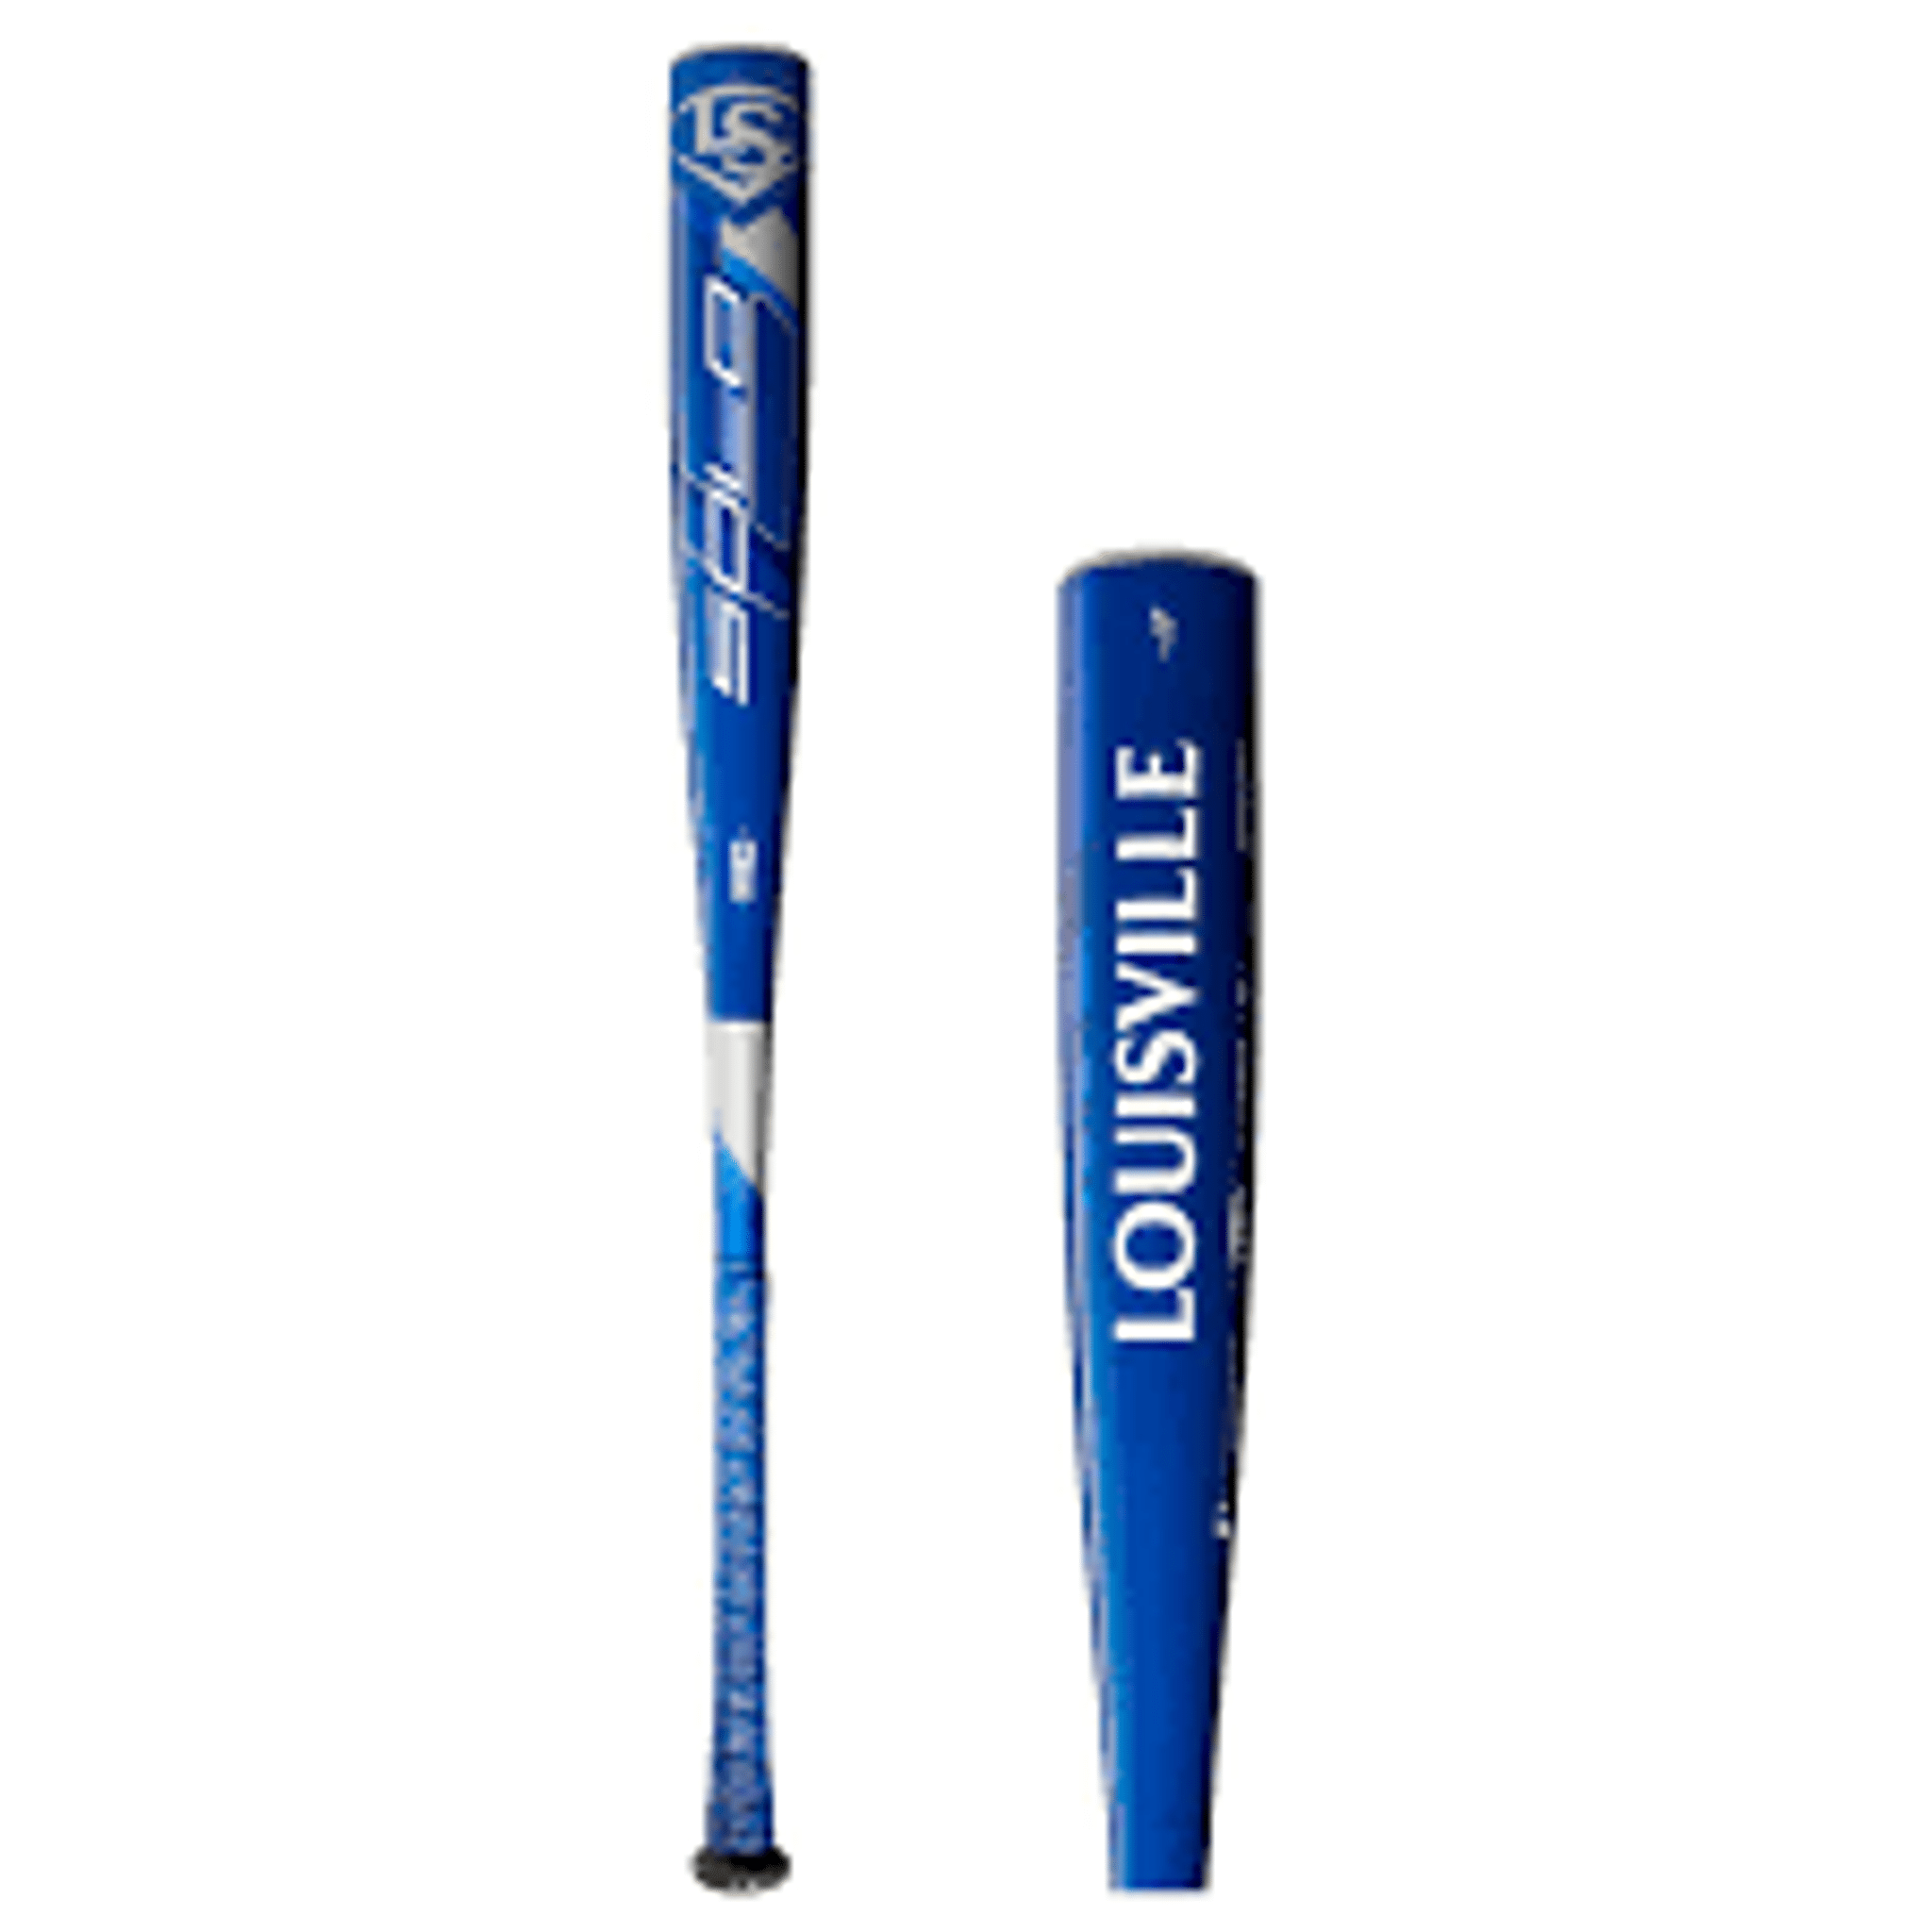 2020 Louisville Slugger Solo (-3) 2 5/8 BBCOR Baseball Bat 33/30 oz